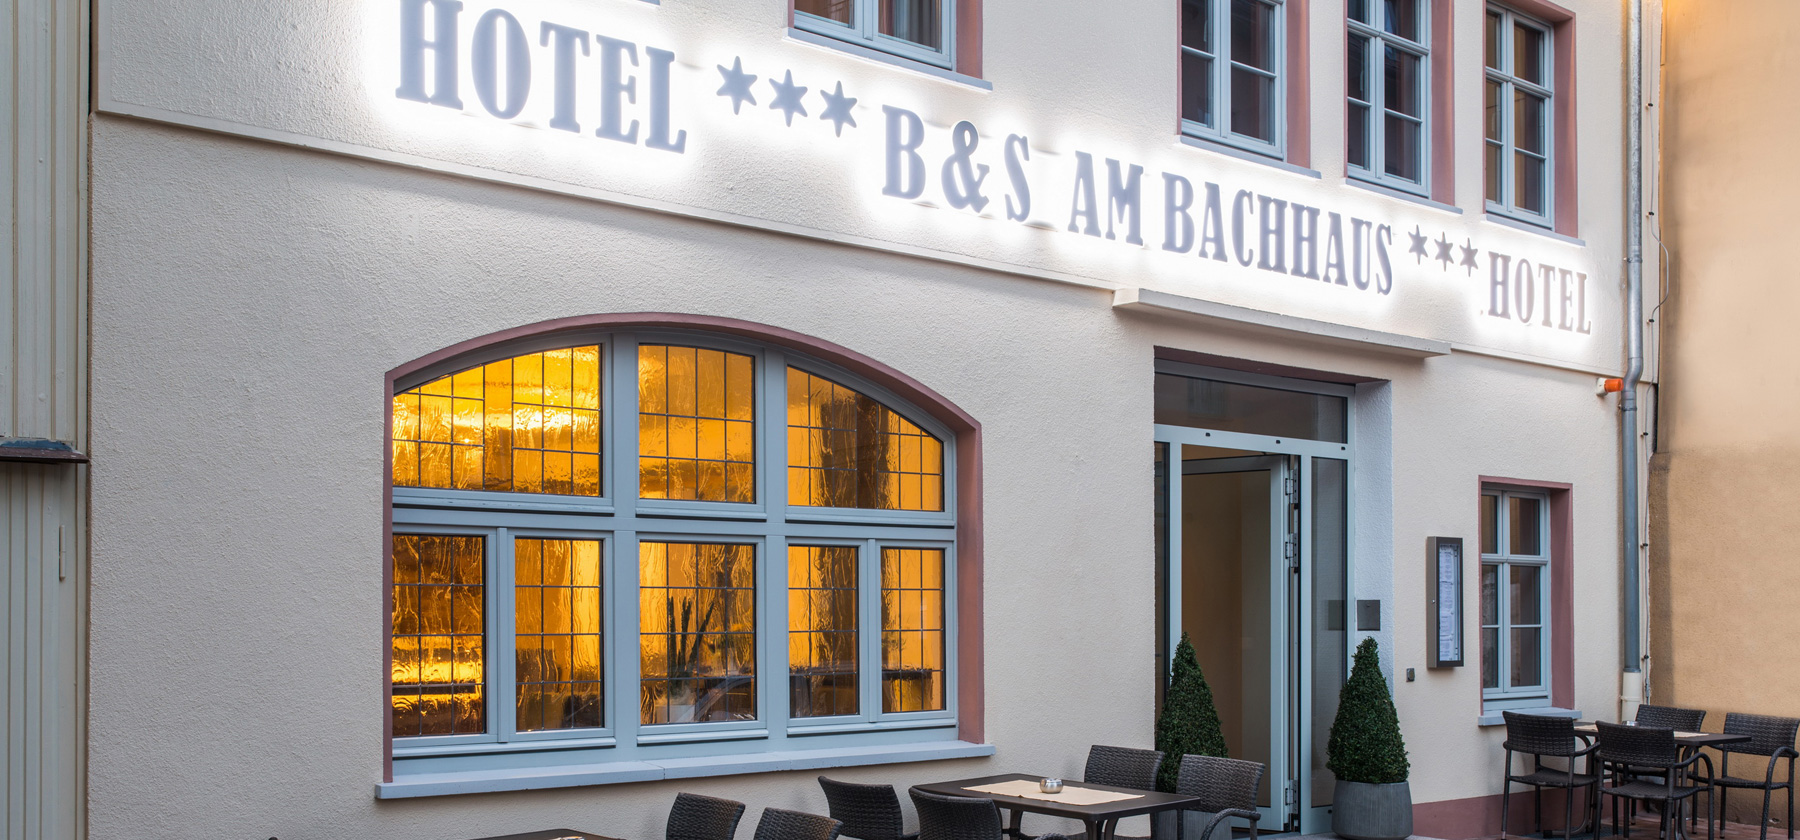 Hotel u. Restaurant am Bachhaus in Eisenach - Thüringer Wald